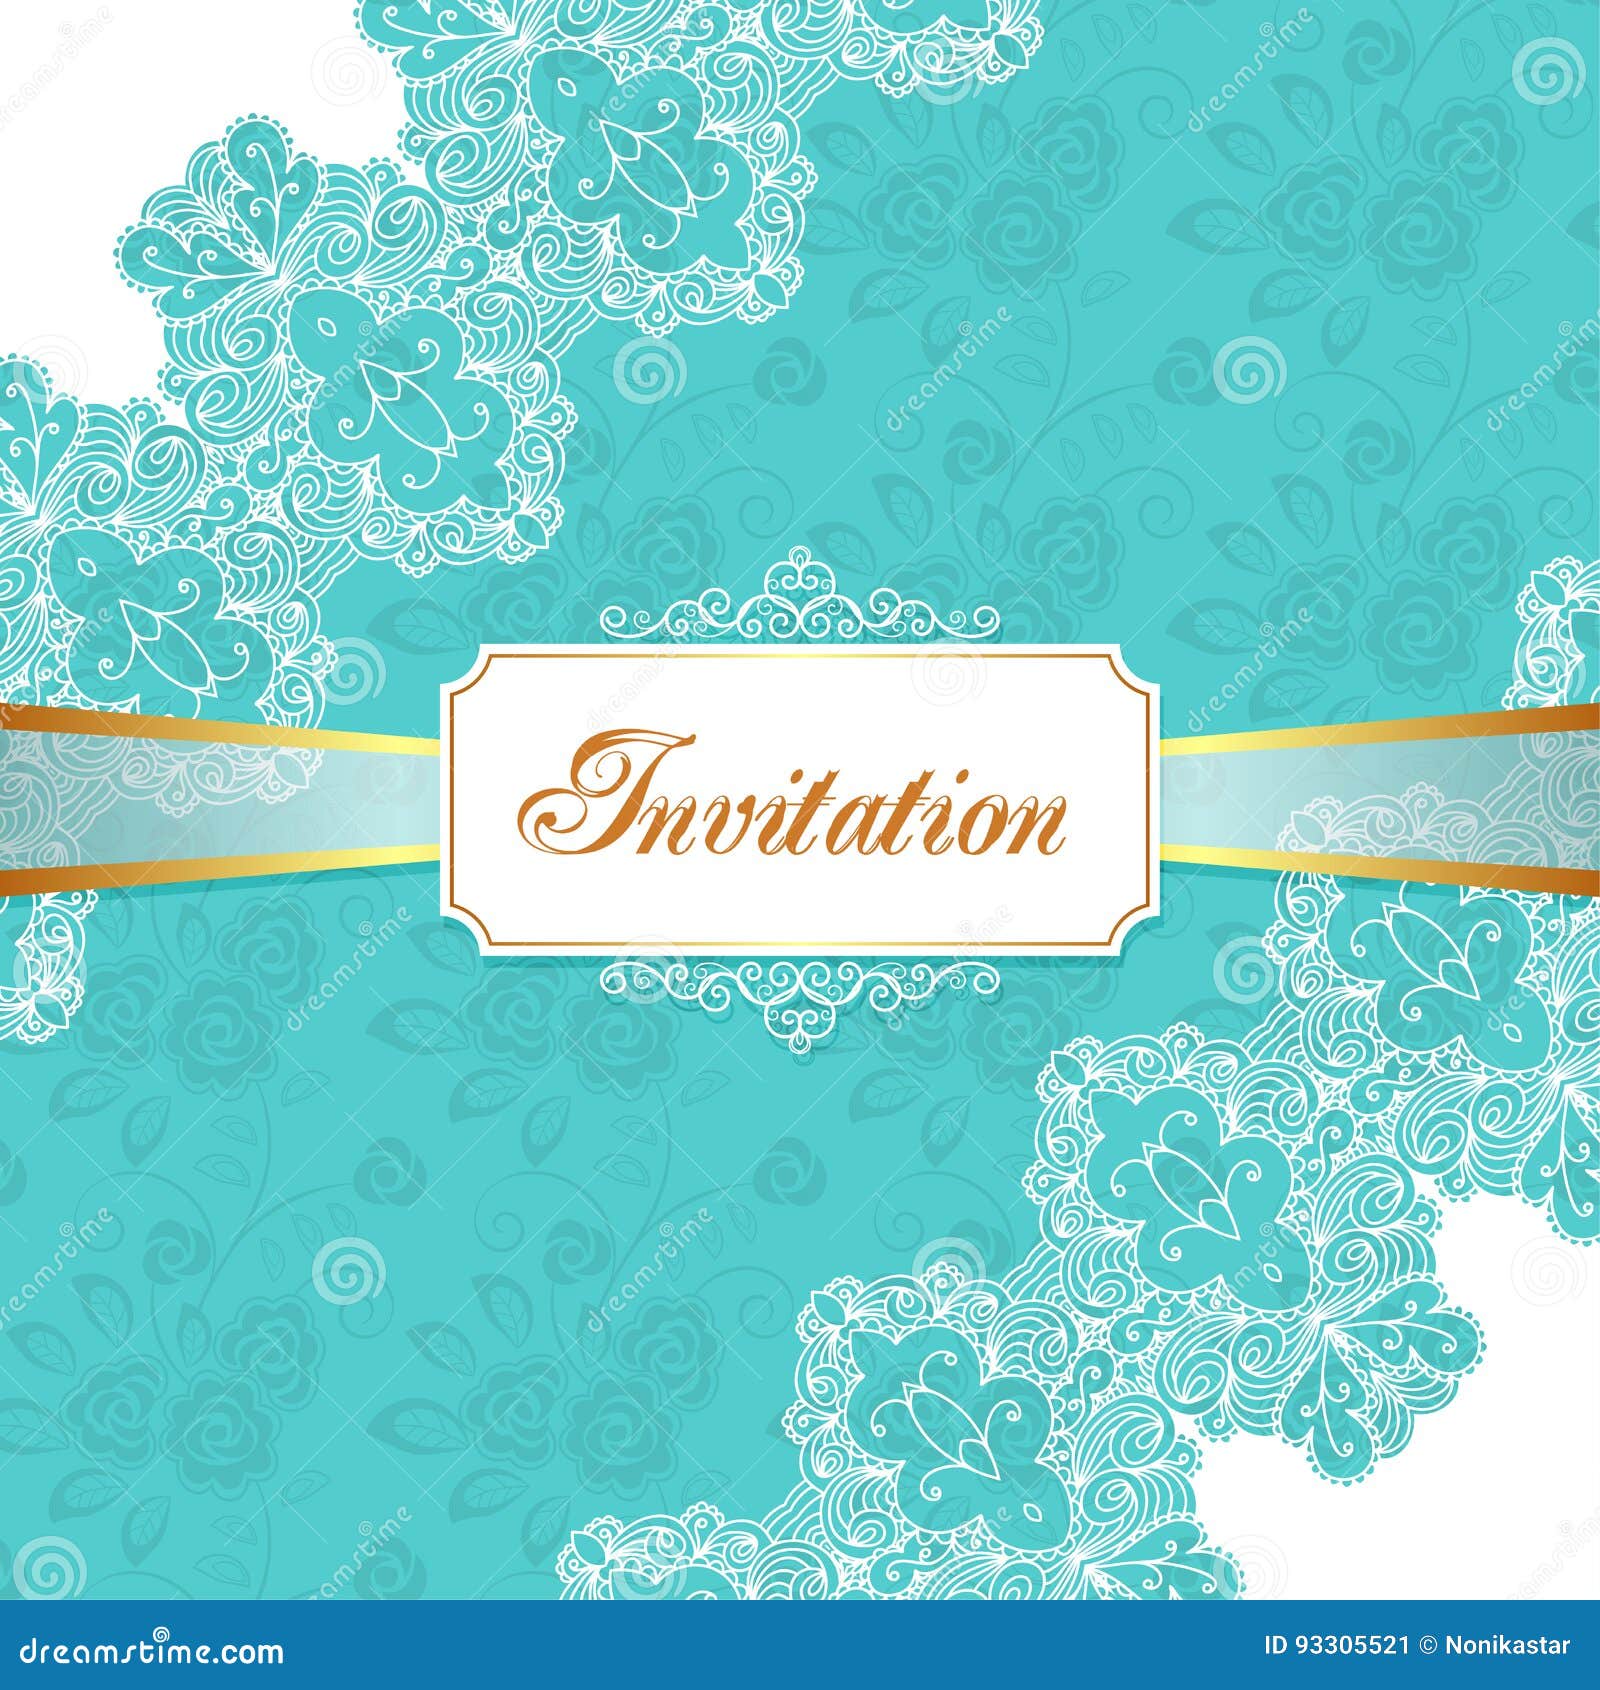 Elegant vintage invitation stock vector. Illustration of elegant - 93305521